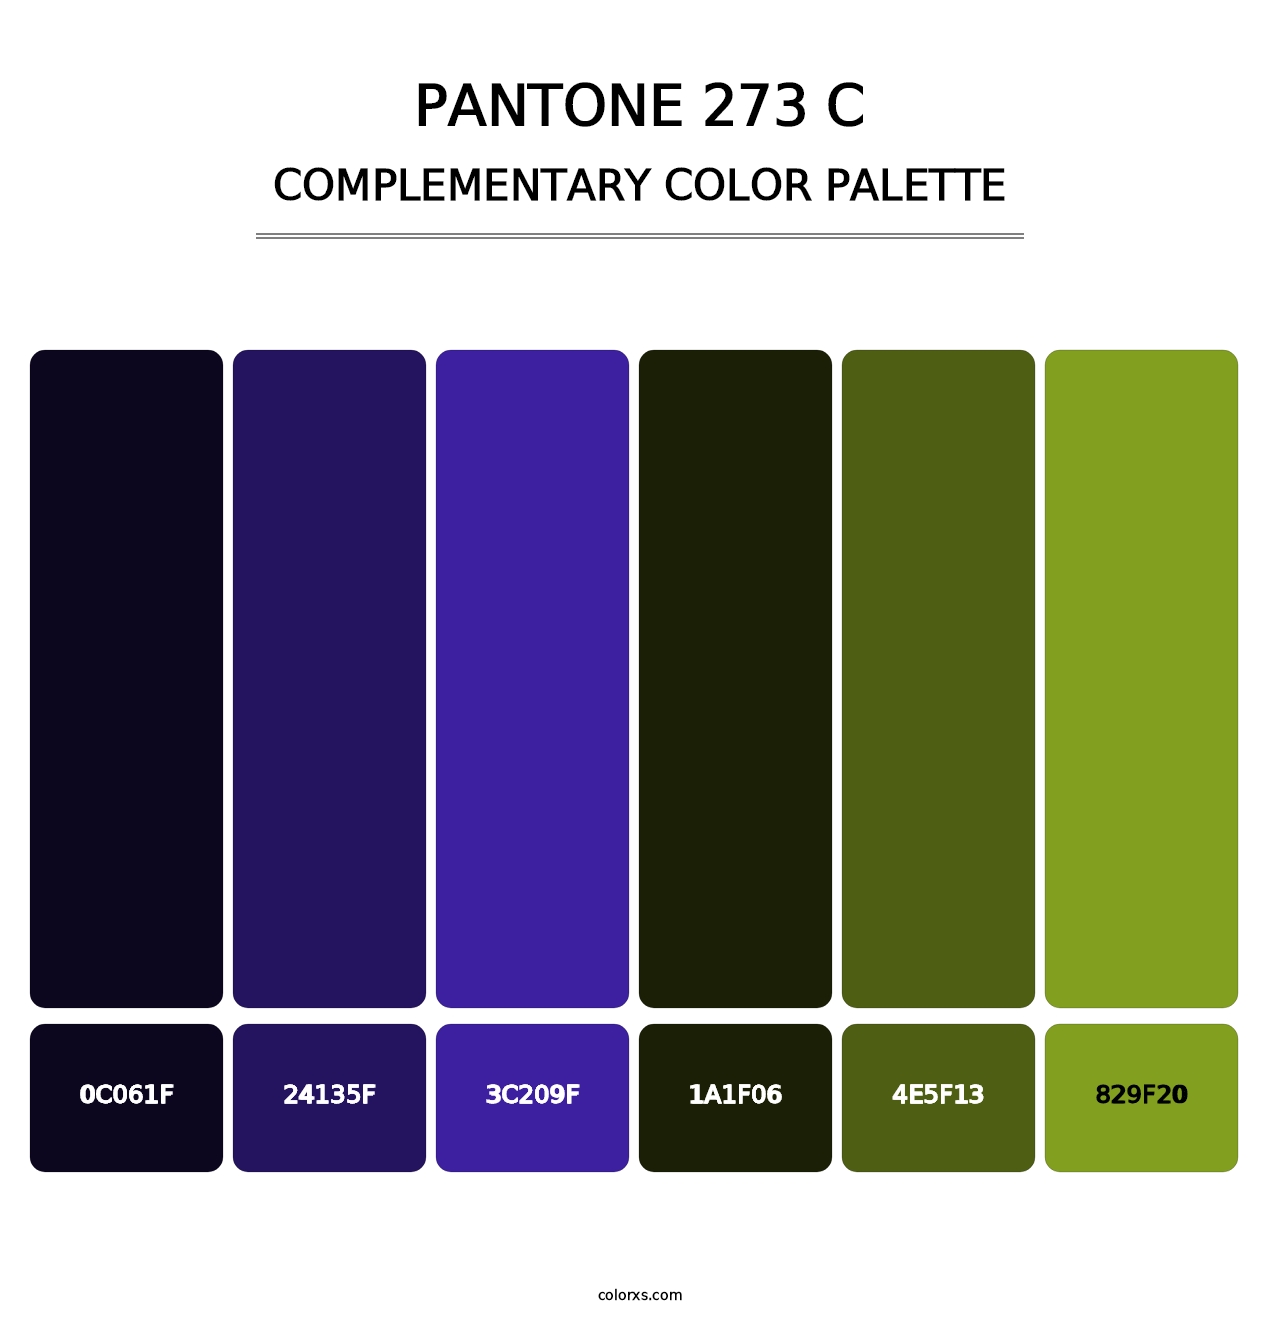 PANTONE 273 C - Complementary Color Palette